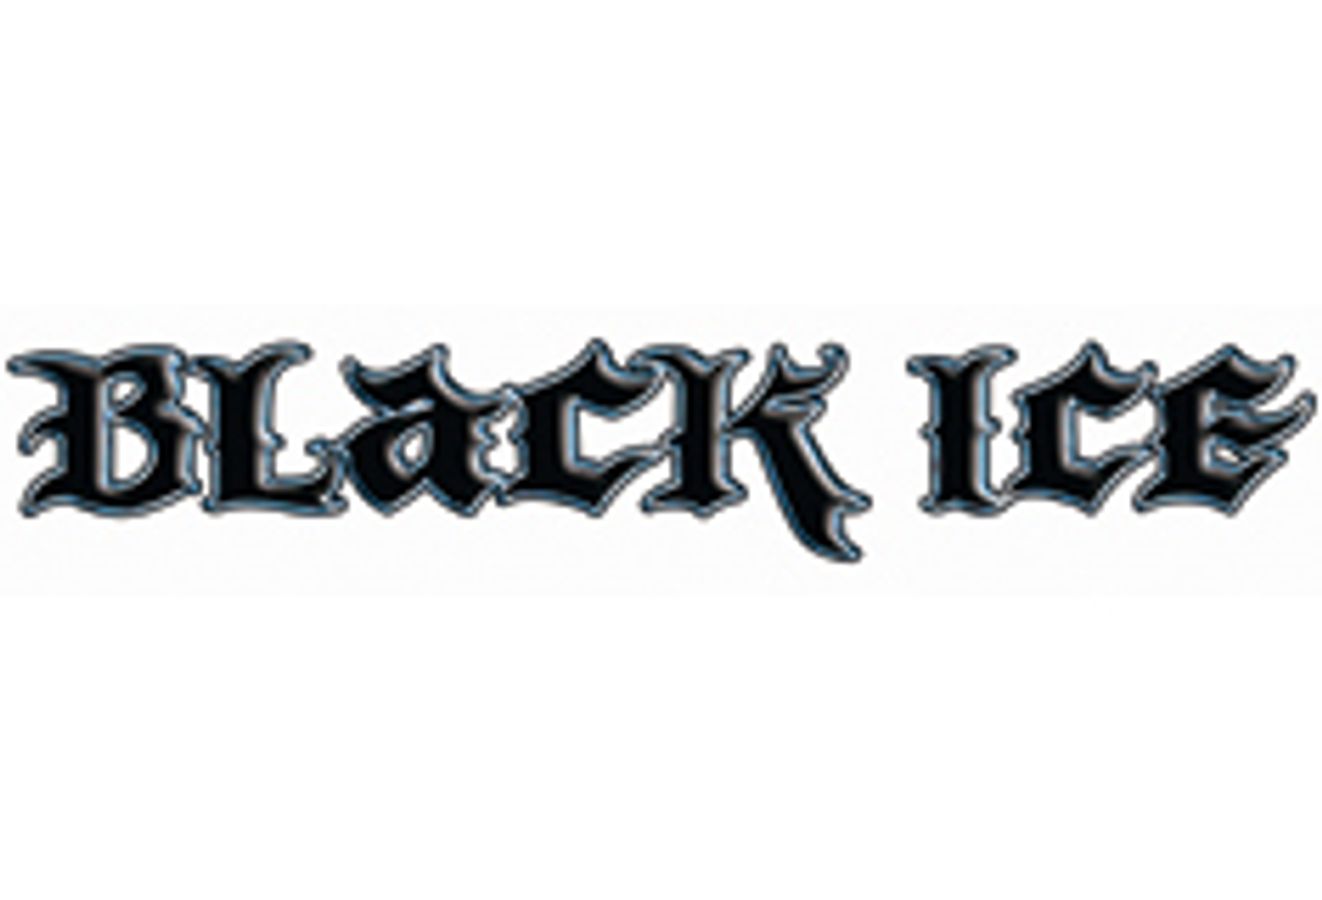 BlackIcePass